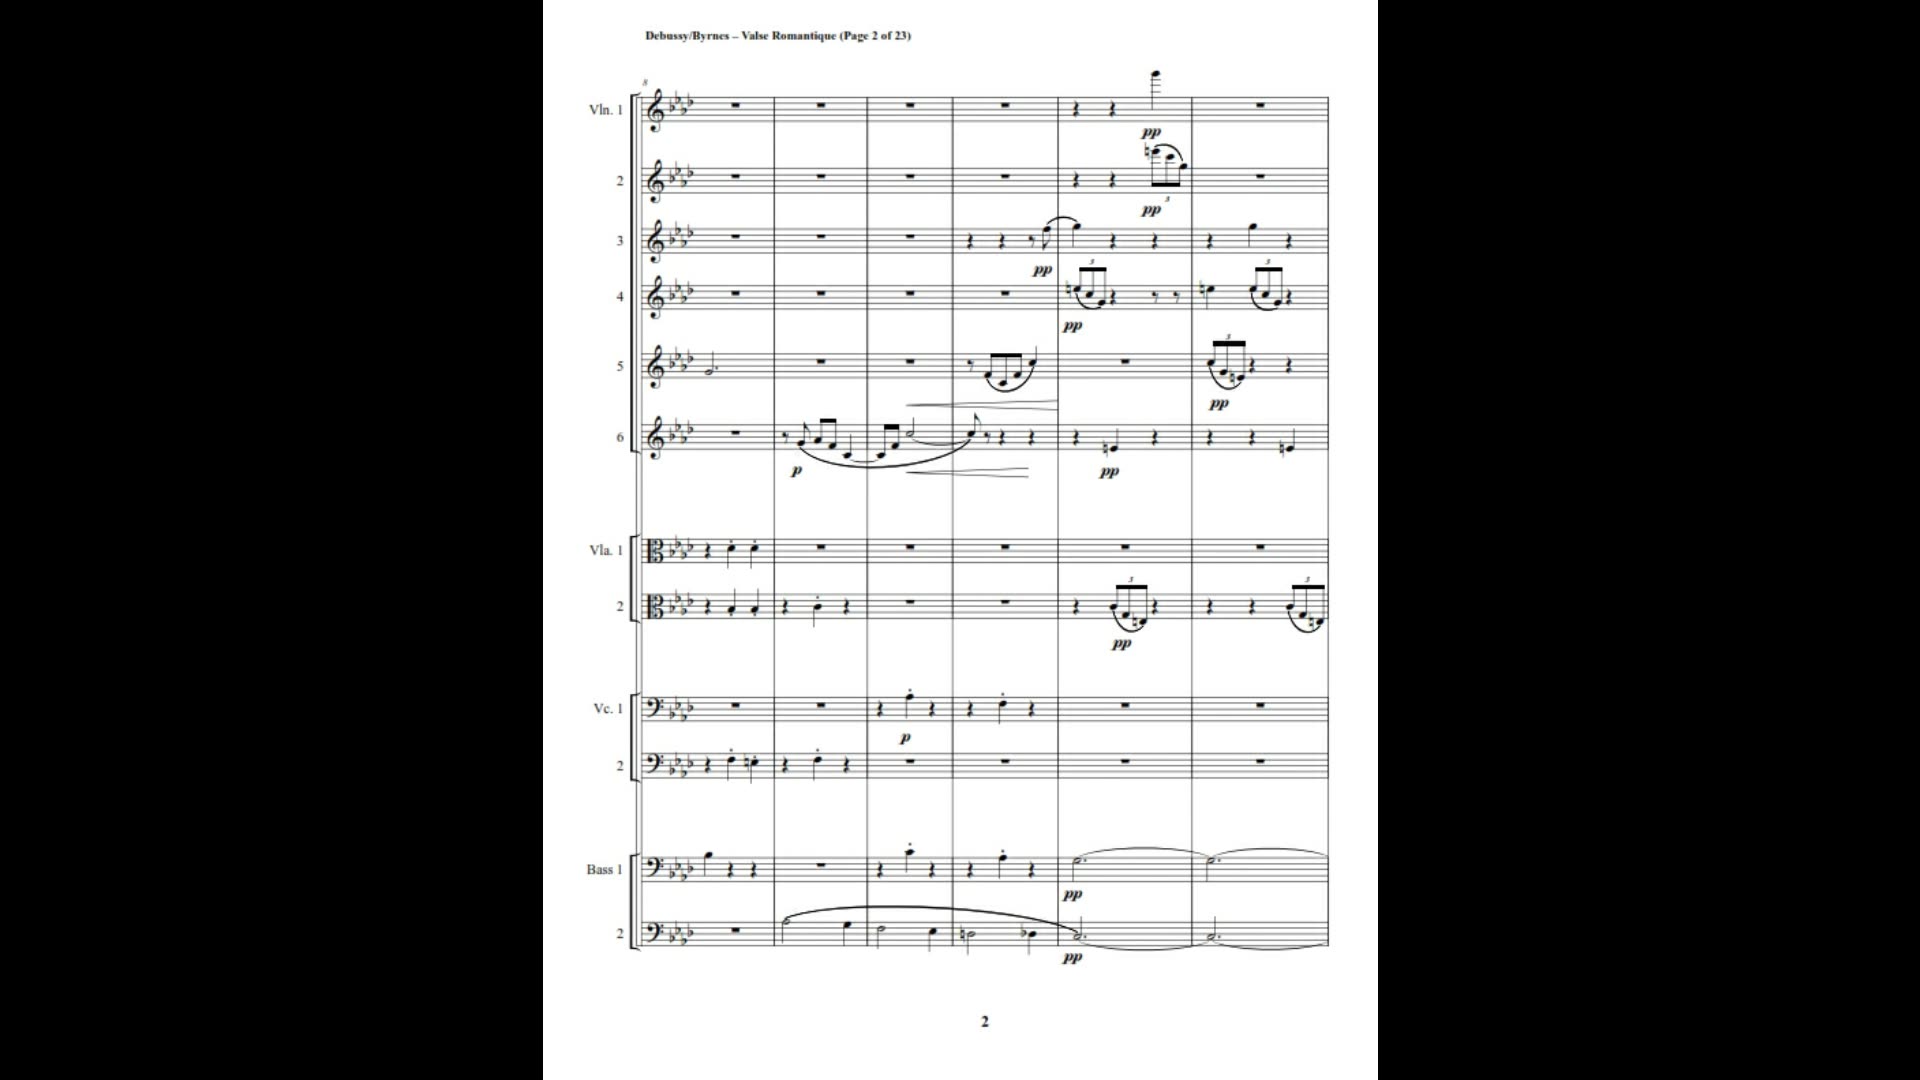 Claude Debussy – Valse Romantique (String Orchestra)